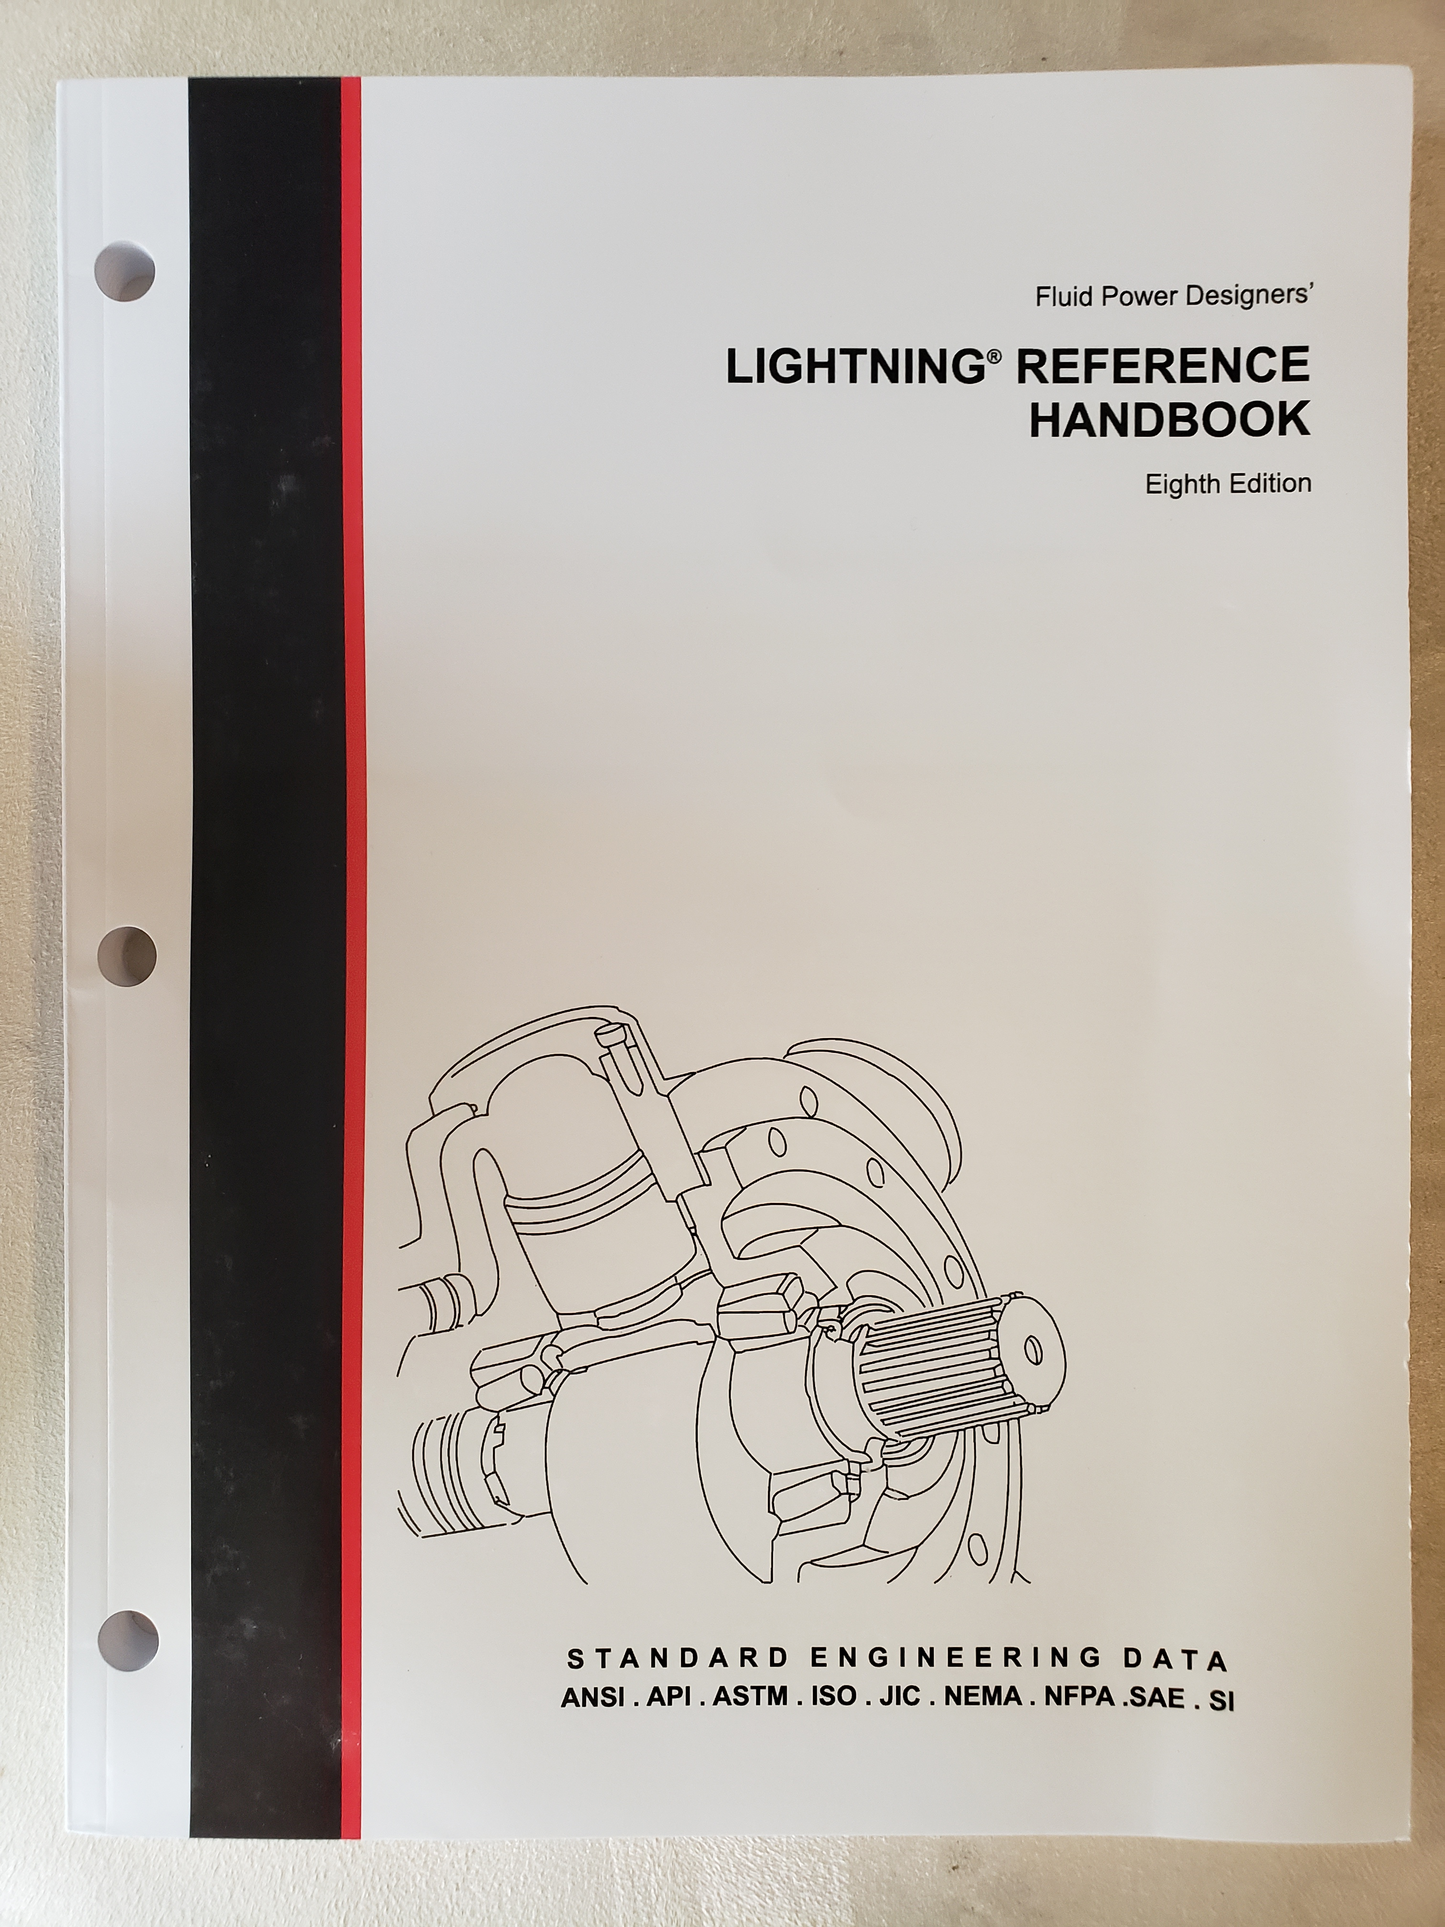 Lightning Reference Handbook Eighth Edition by Fluid Power Designers